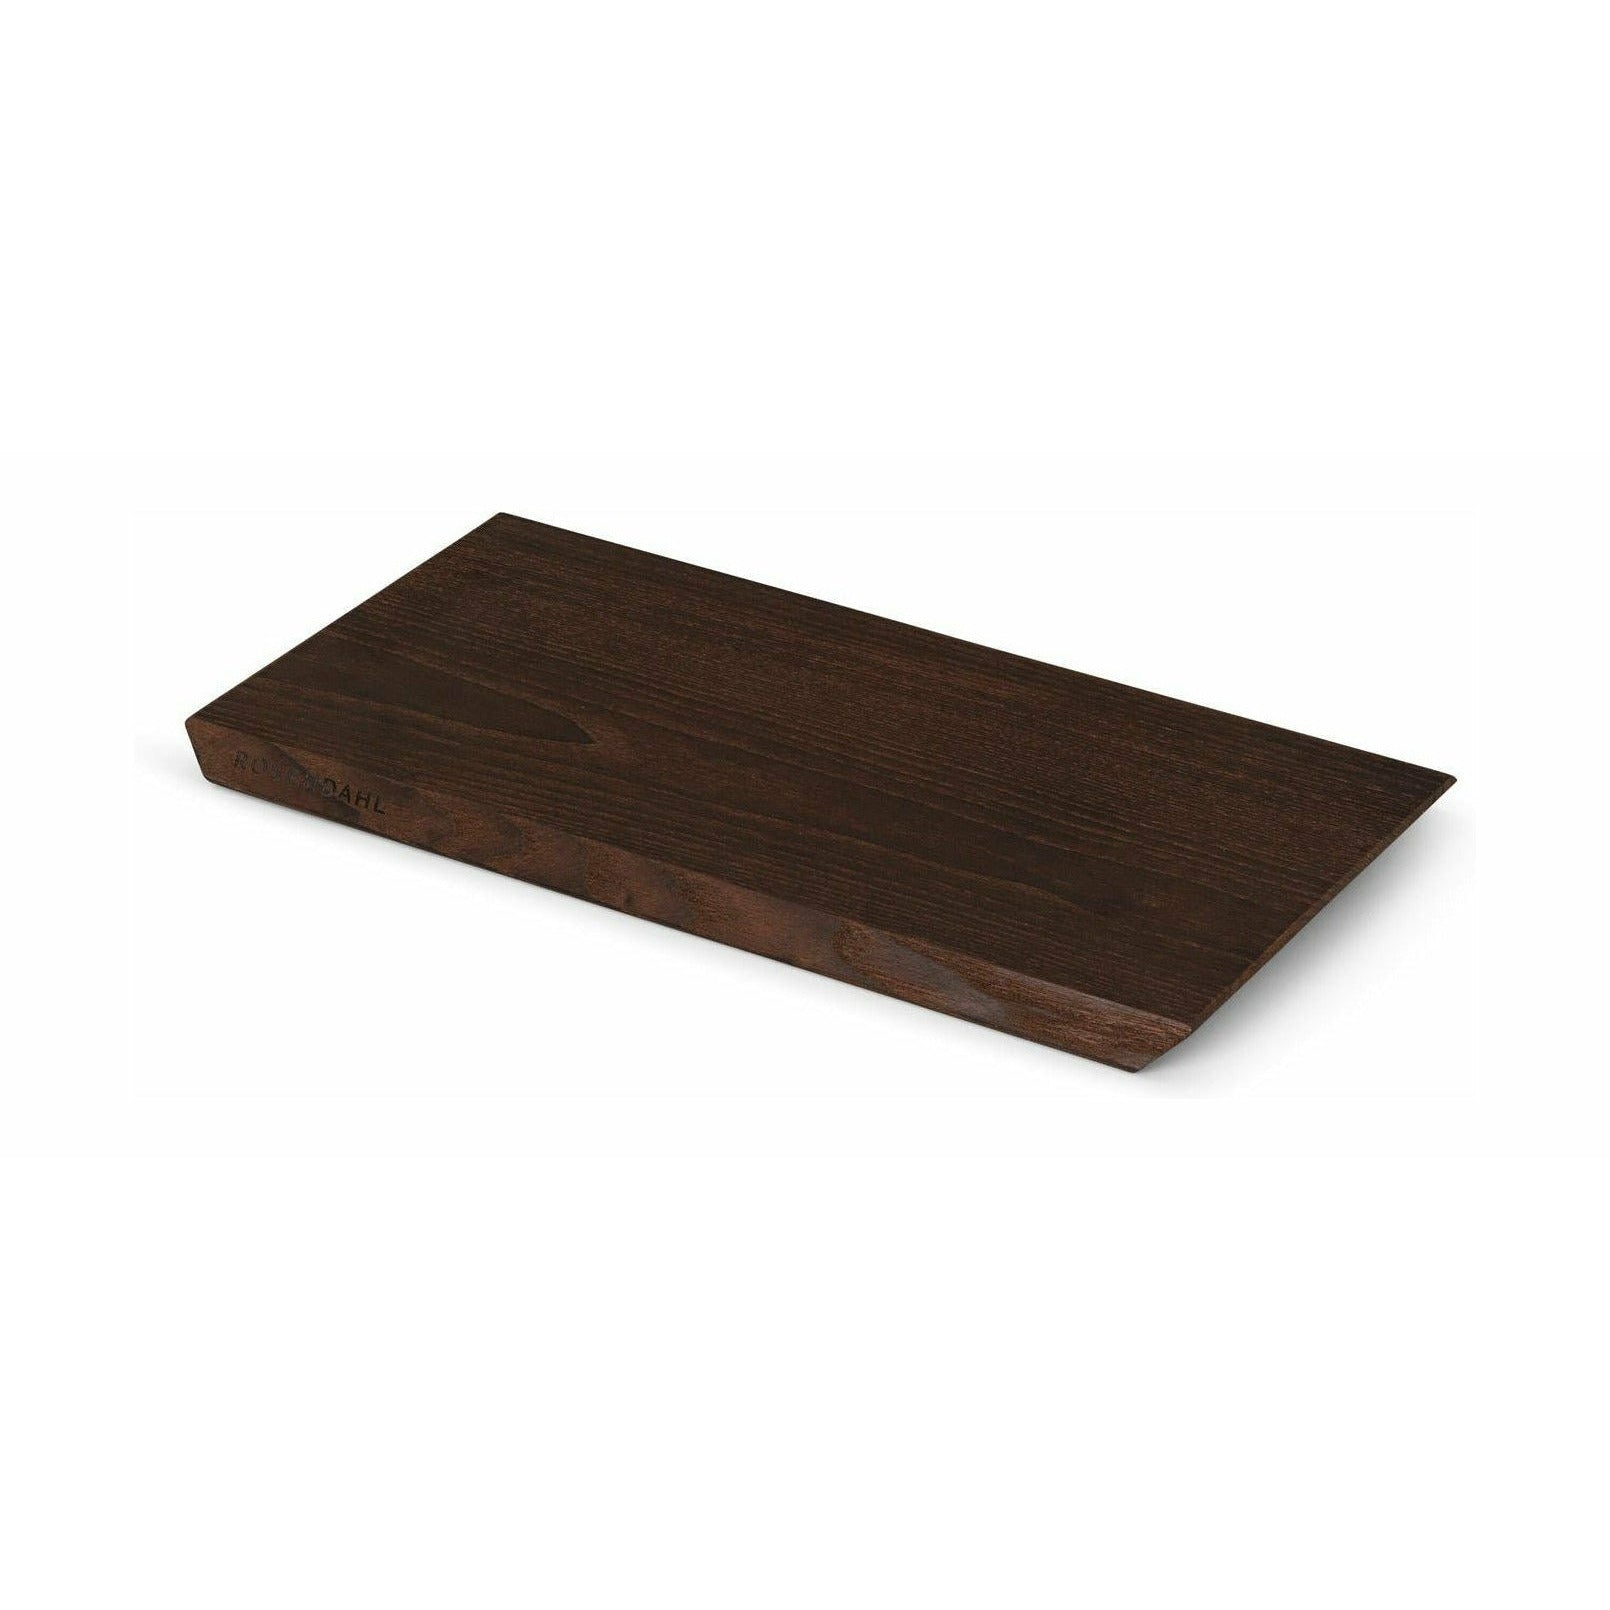 Rosendahl Rå Cutting Board Oak Oiled, 17,5x31 Cm